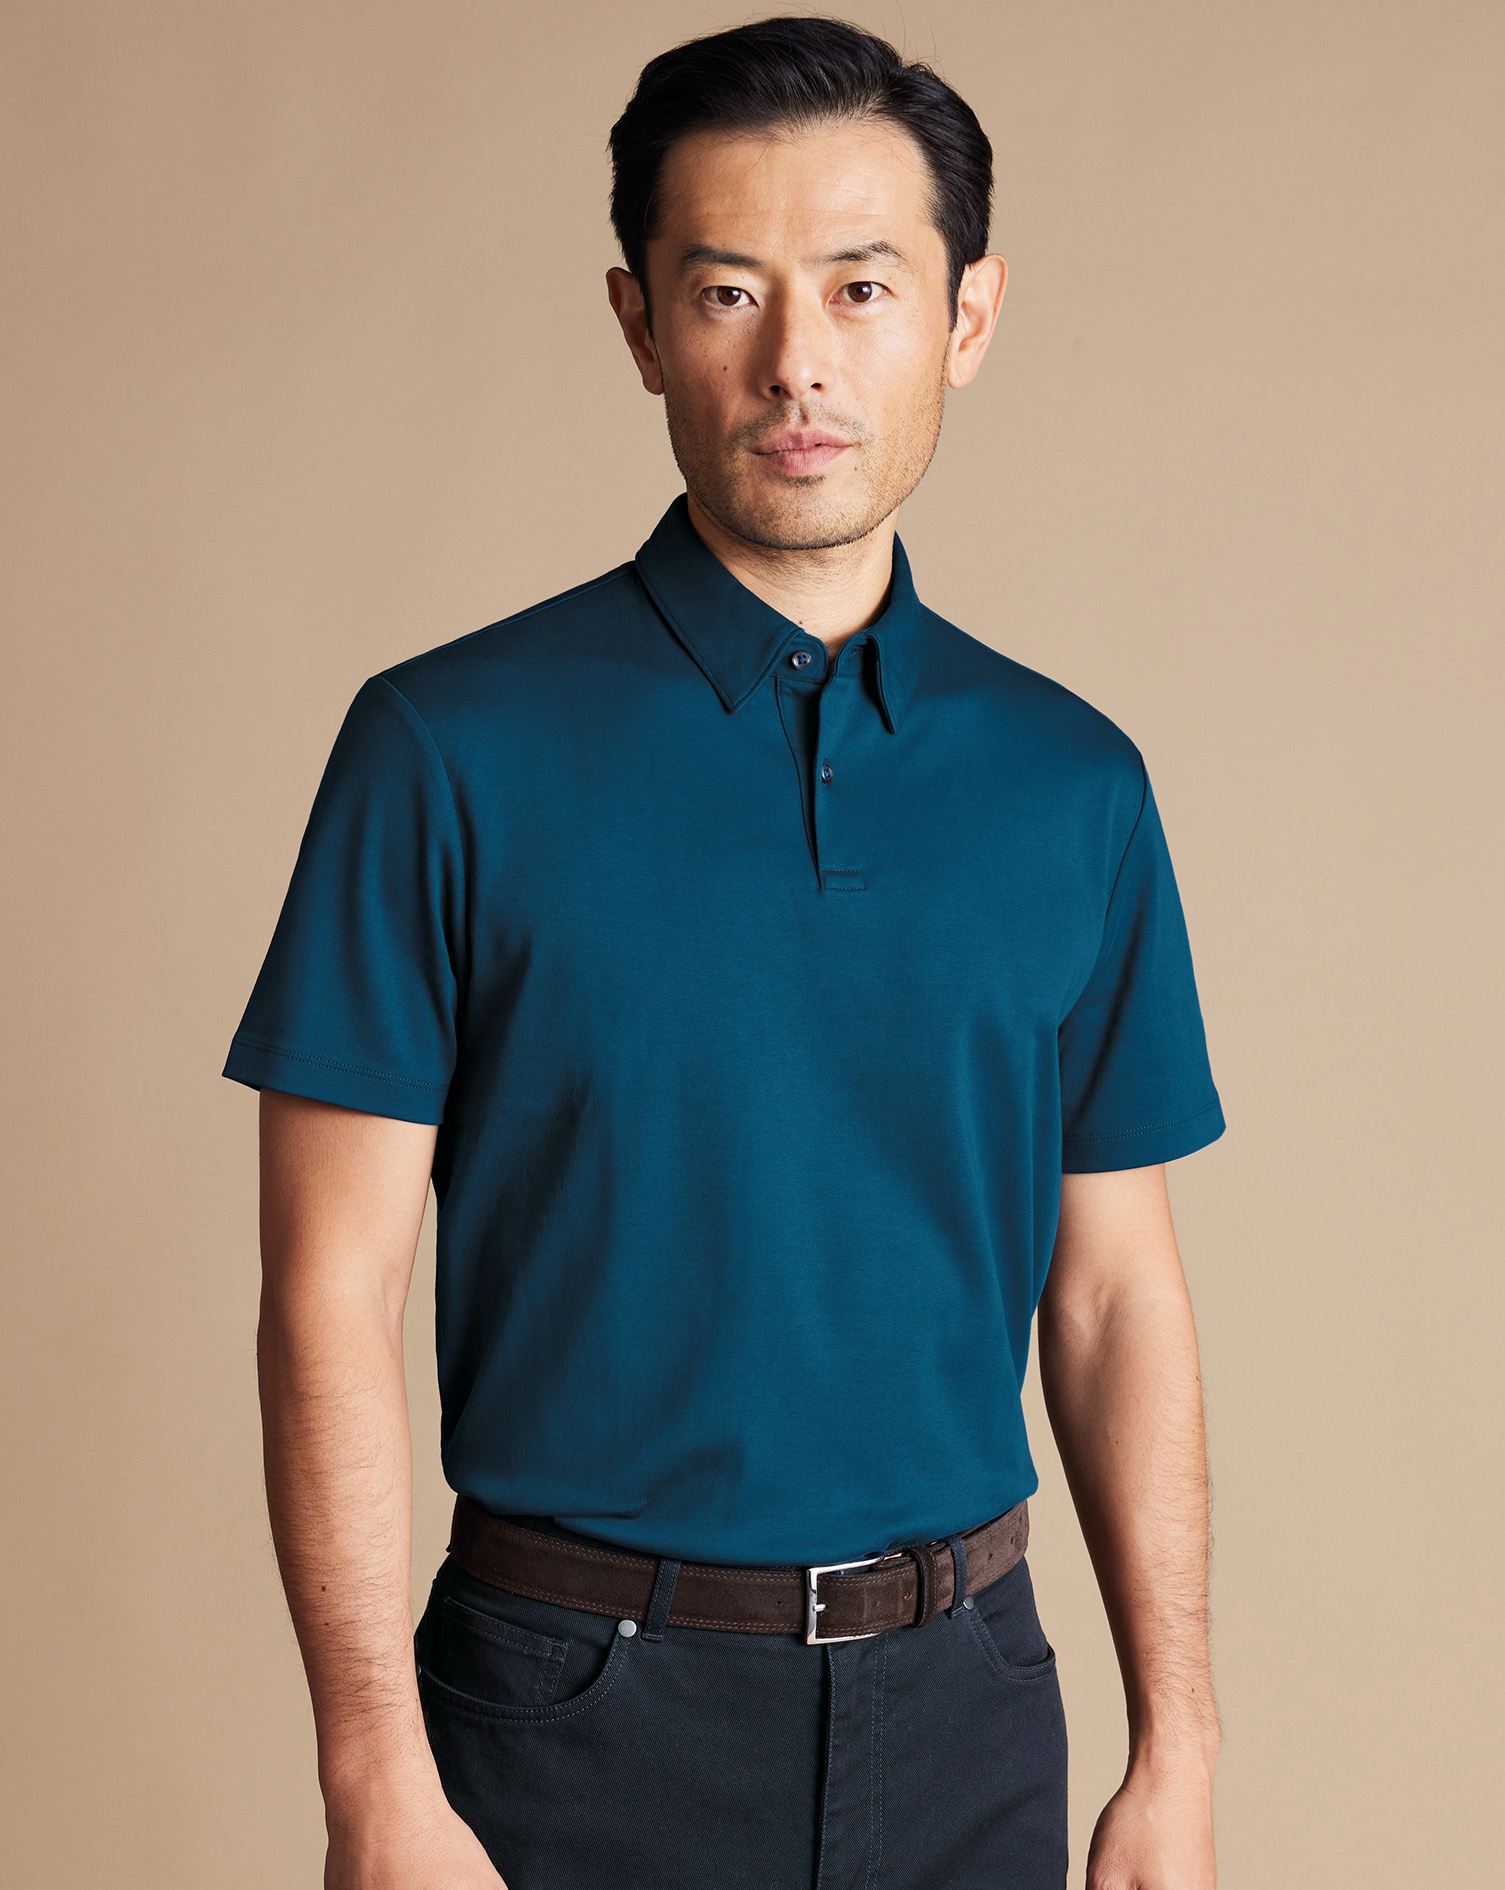 Men's Charles Tyrwhitt Smart Jersey Polo Shirt - Turquoise Blue Size Small Cotton
